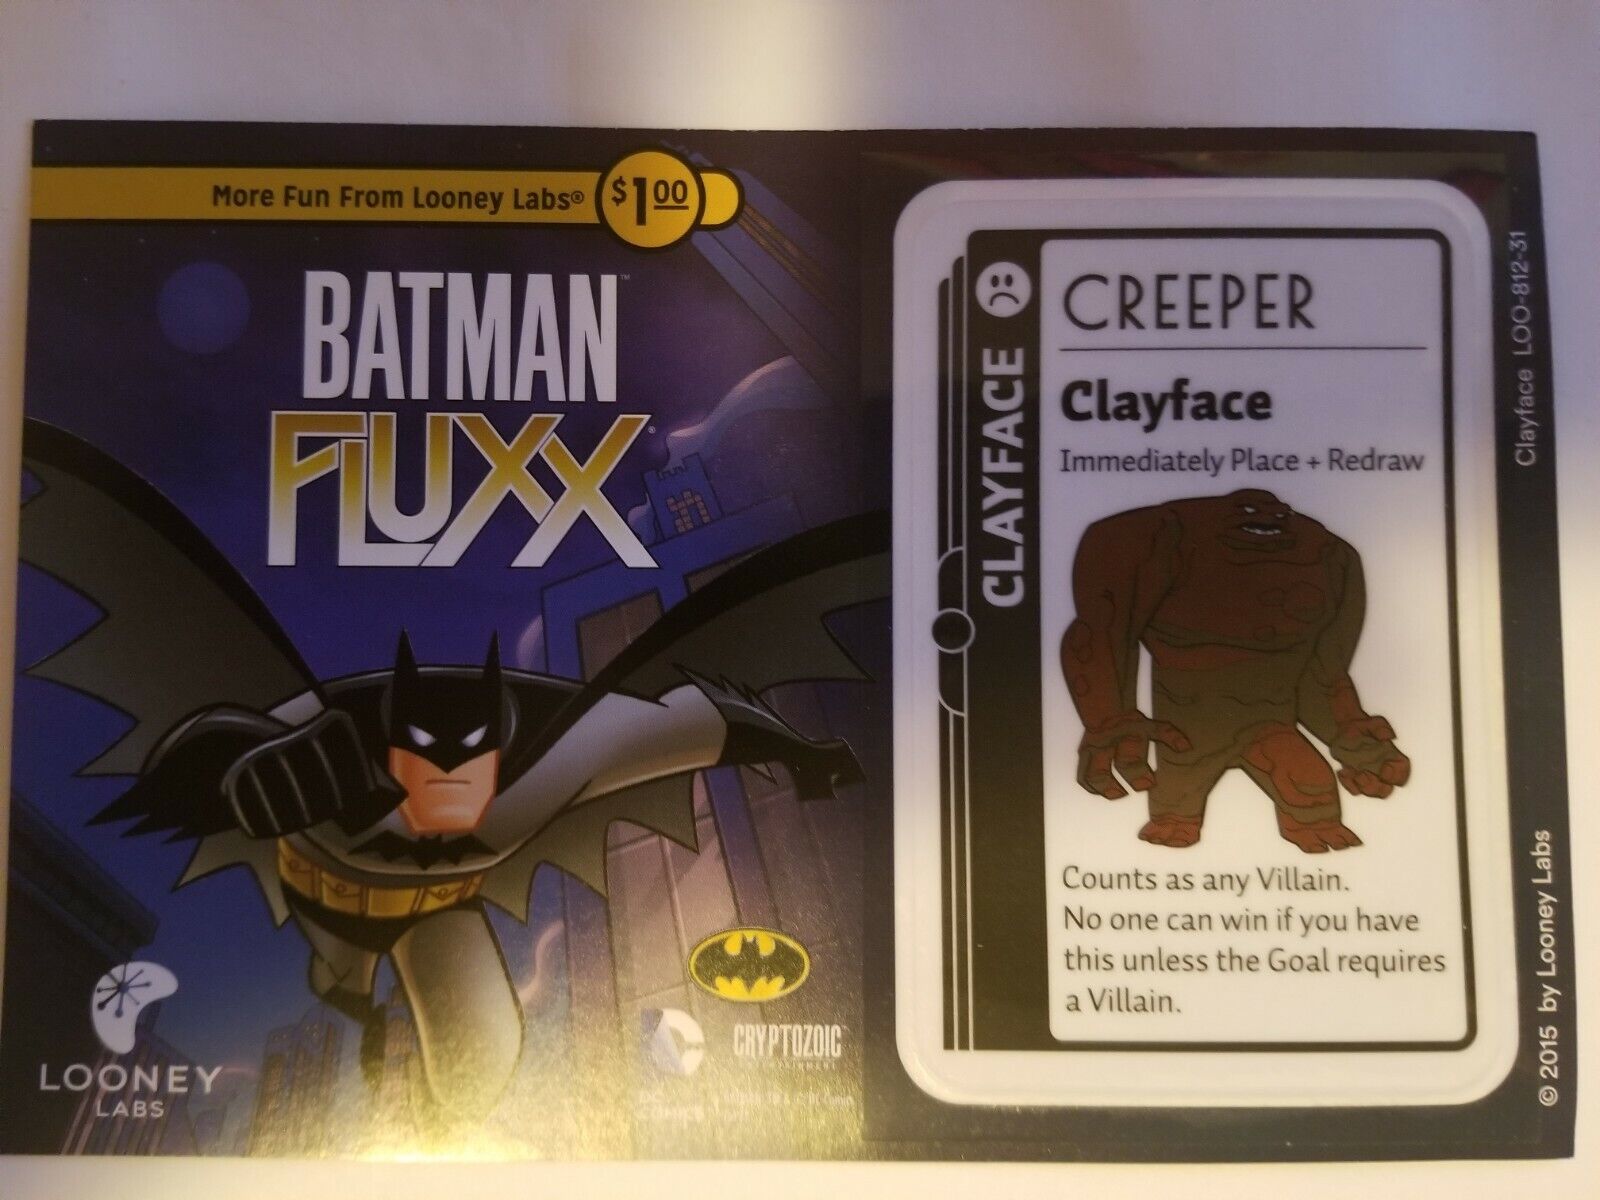 Batman Fluxx Looney Labs Clayface Creeper Promo Card